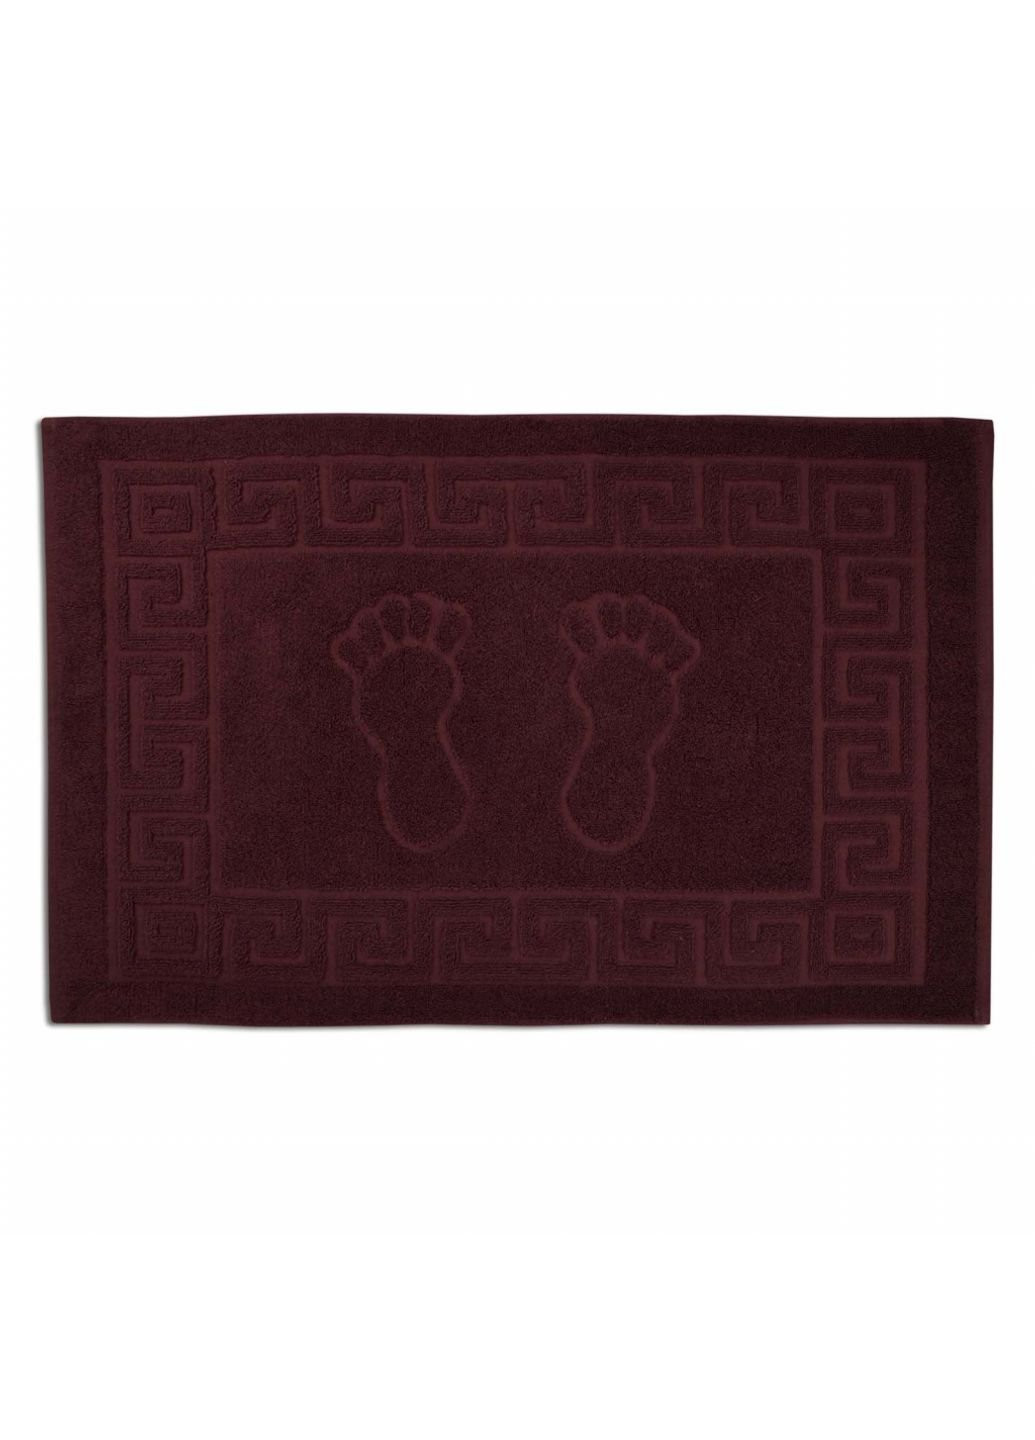 Home Line полотенце махровое (коврик) ножки коричневый 50х70 см (135804) бордовый производство - Азербайджан